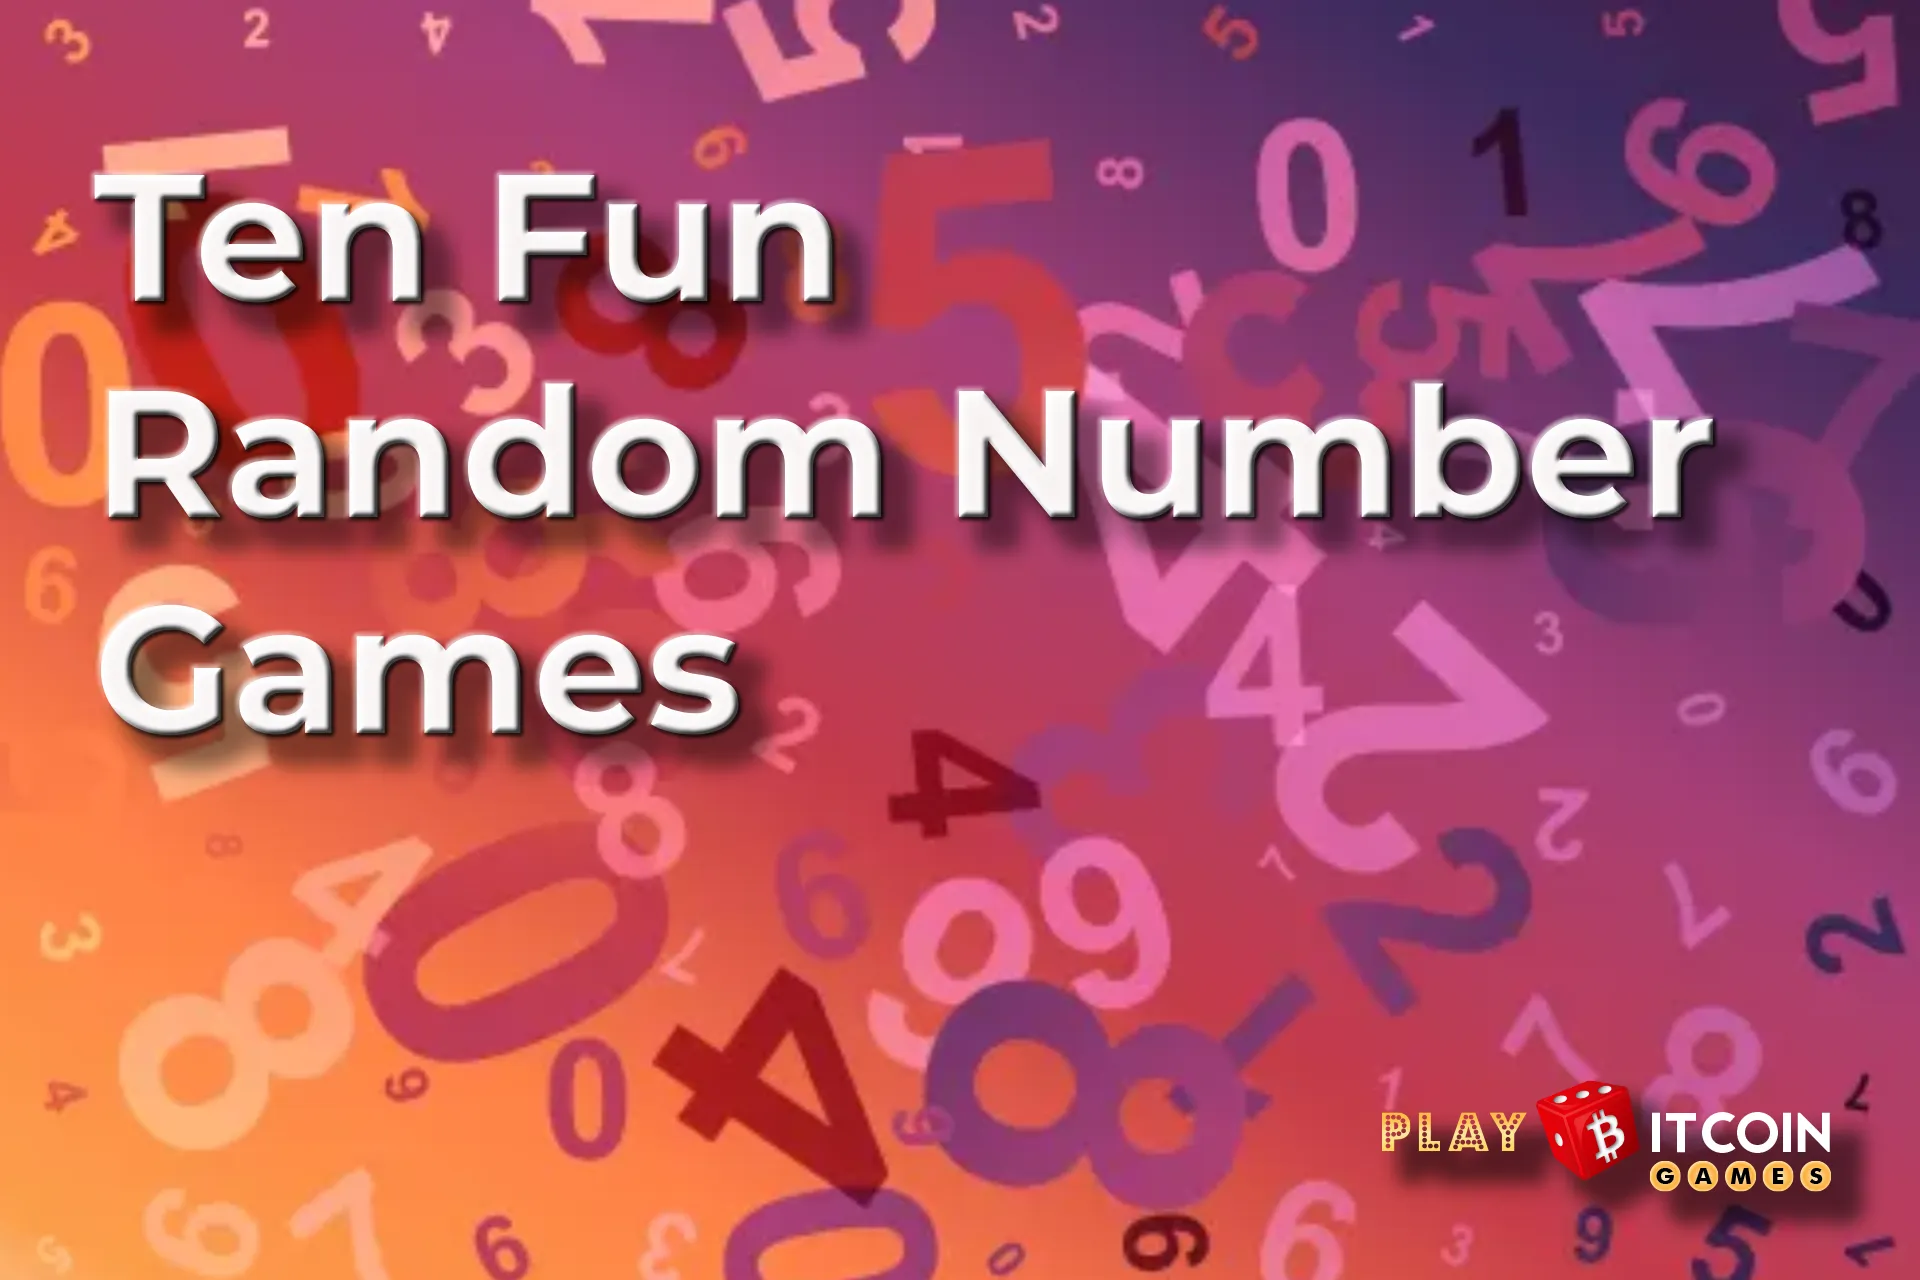 10 fun random number games - play bitcoingames.com